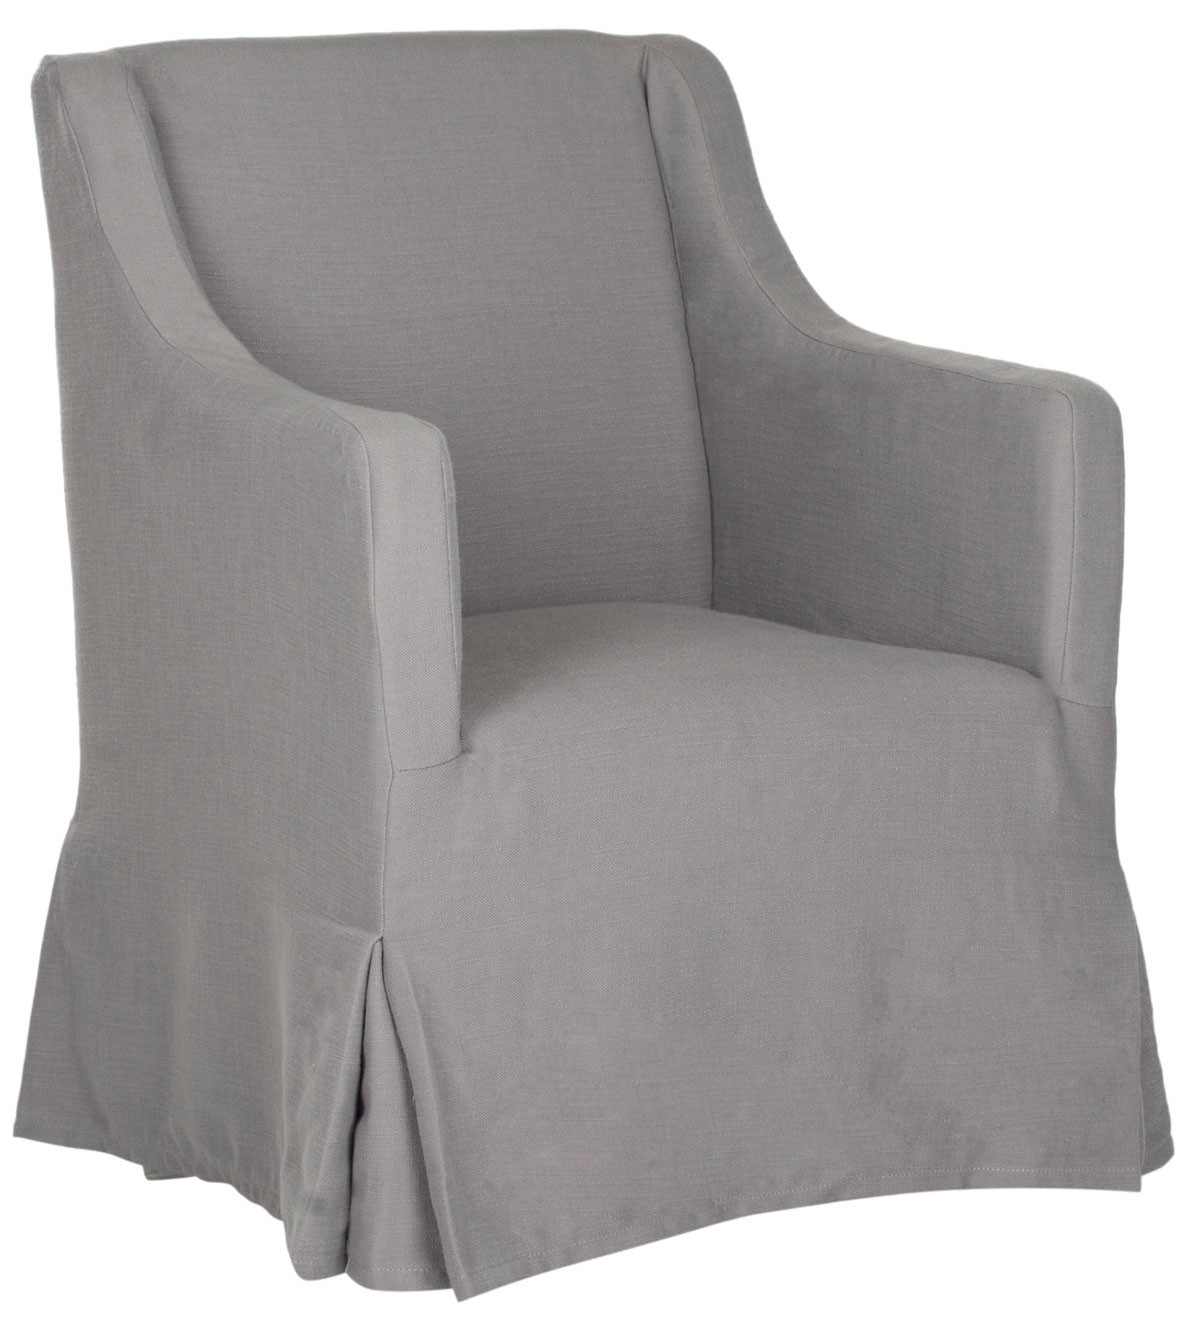 Mcr4542b accent chairs furniture by safavieh